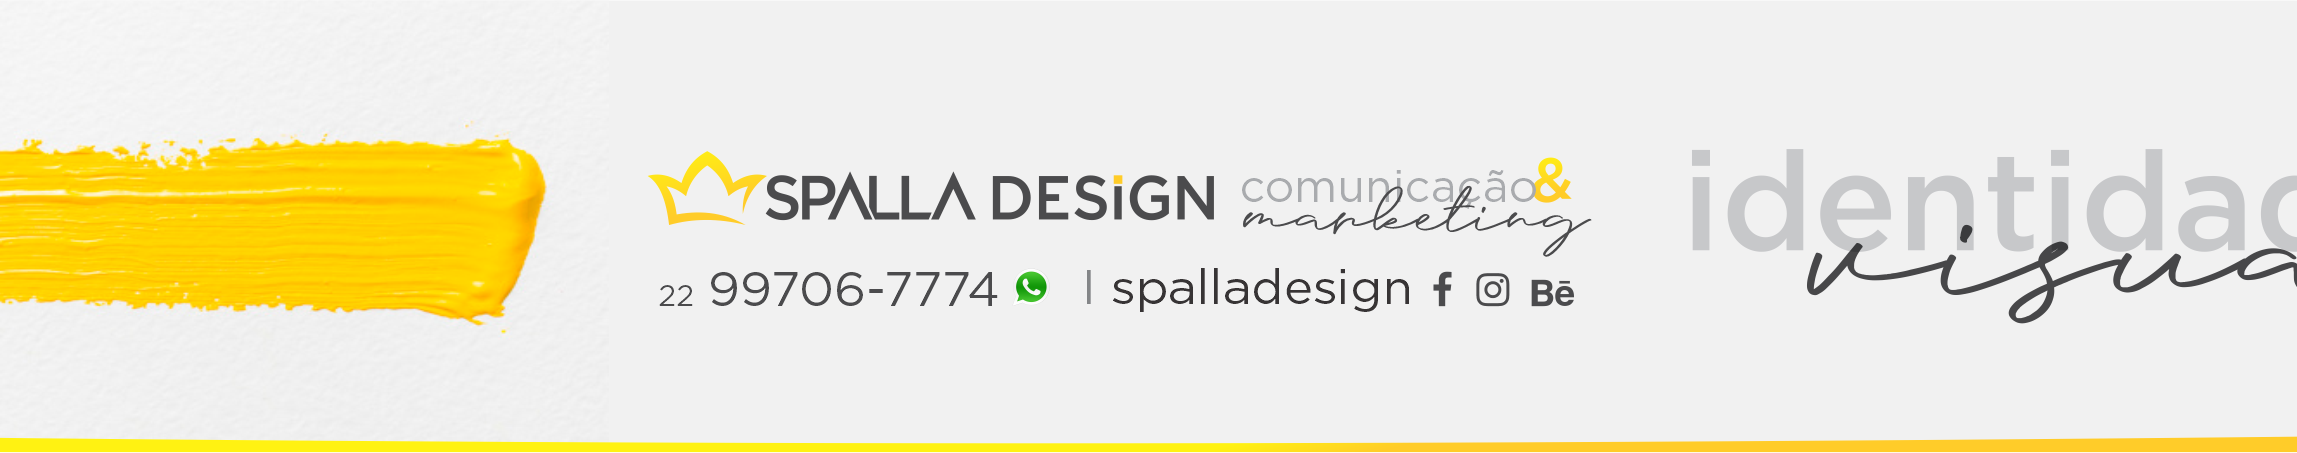 Banner de perfil de Spalla Design